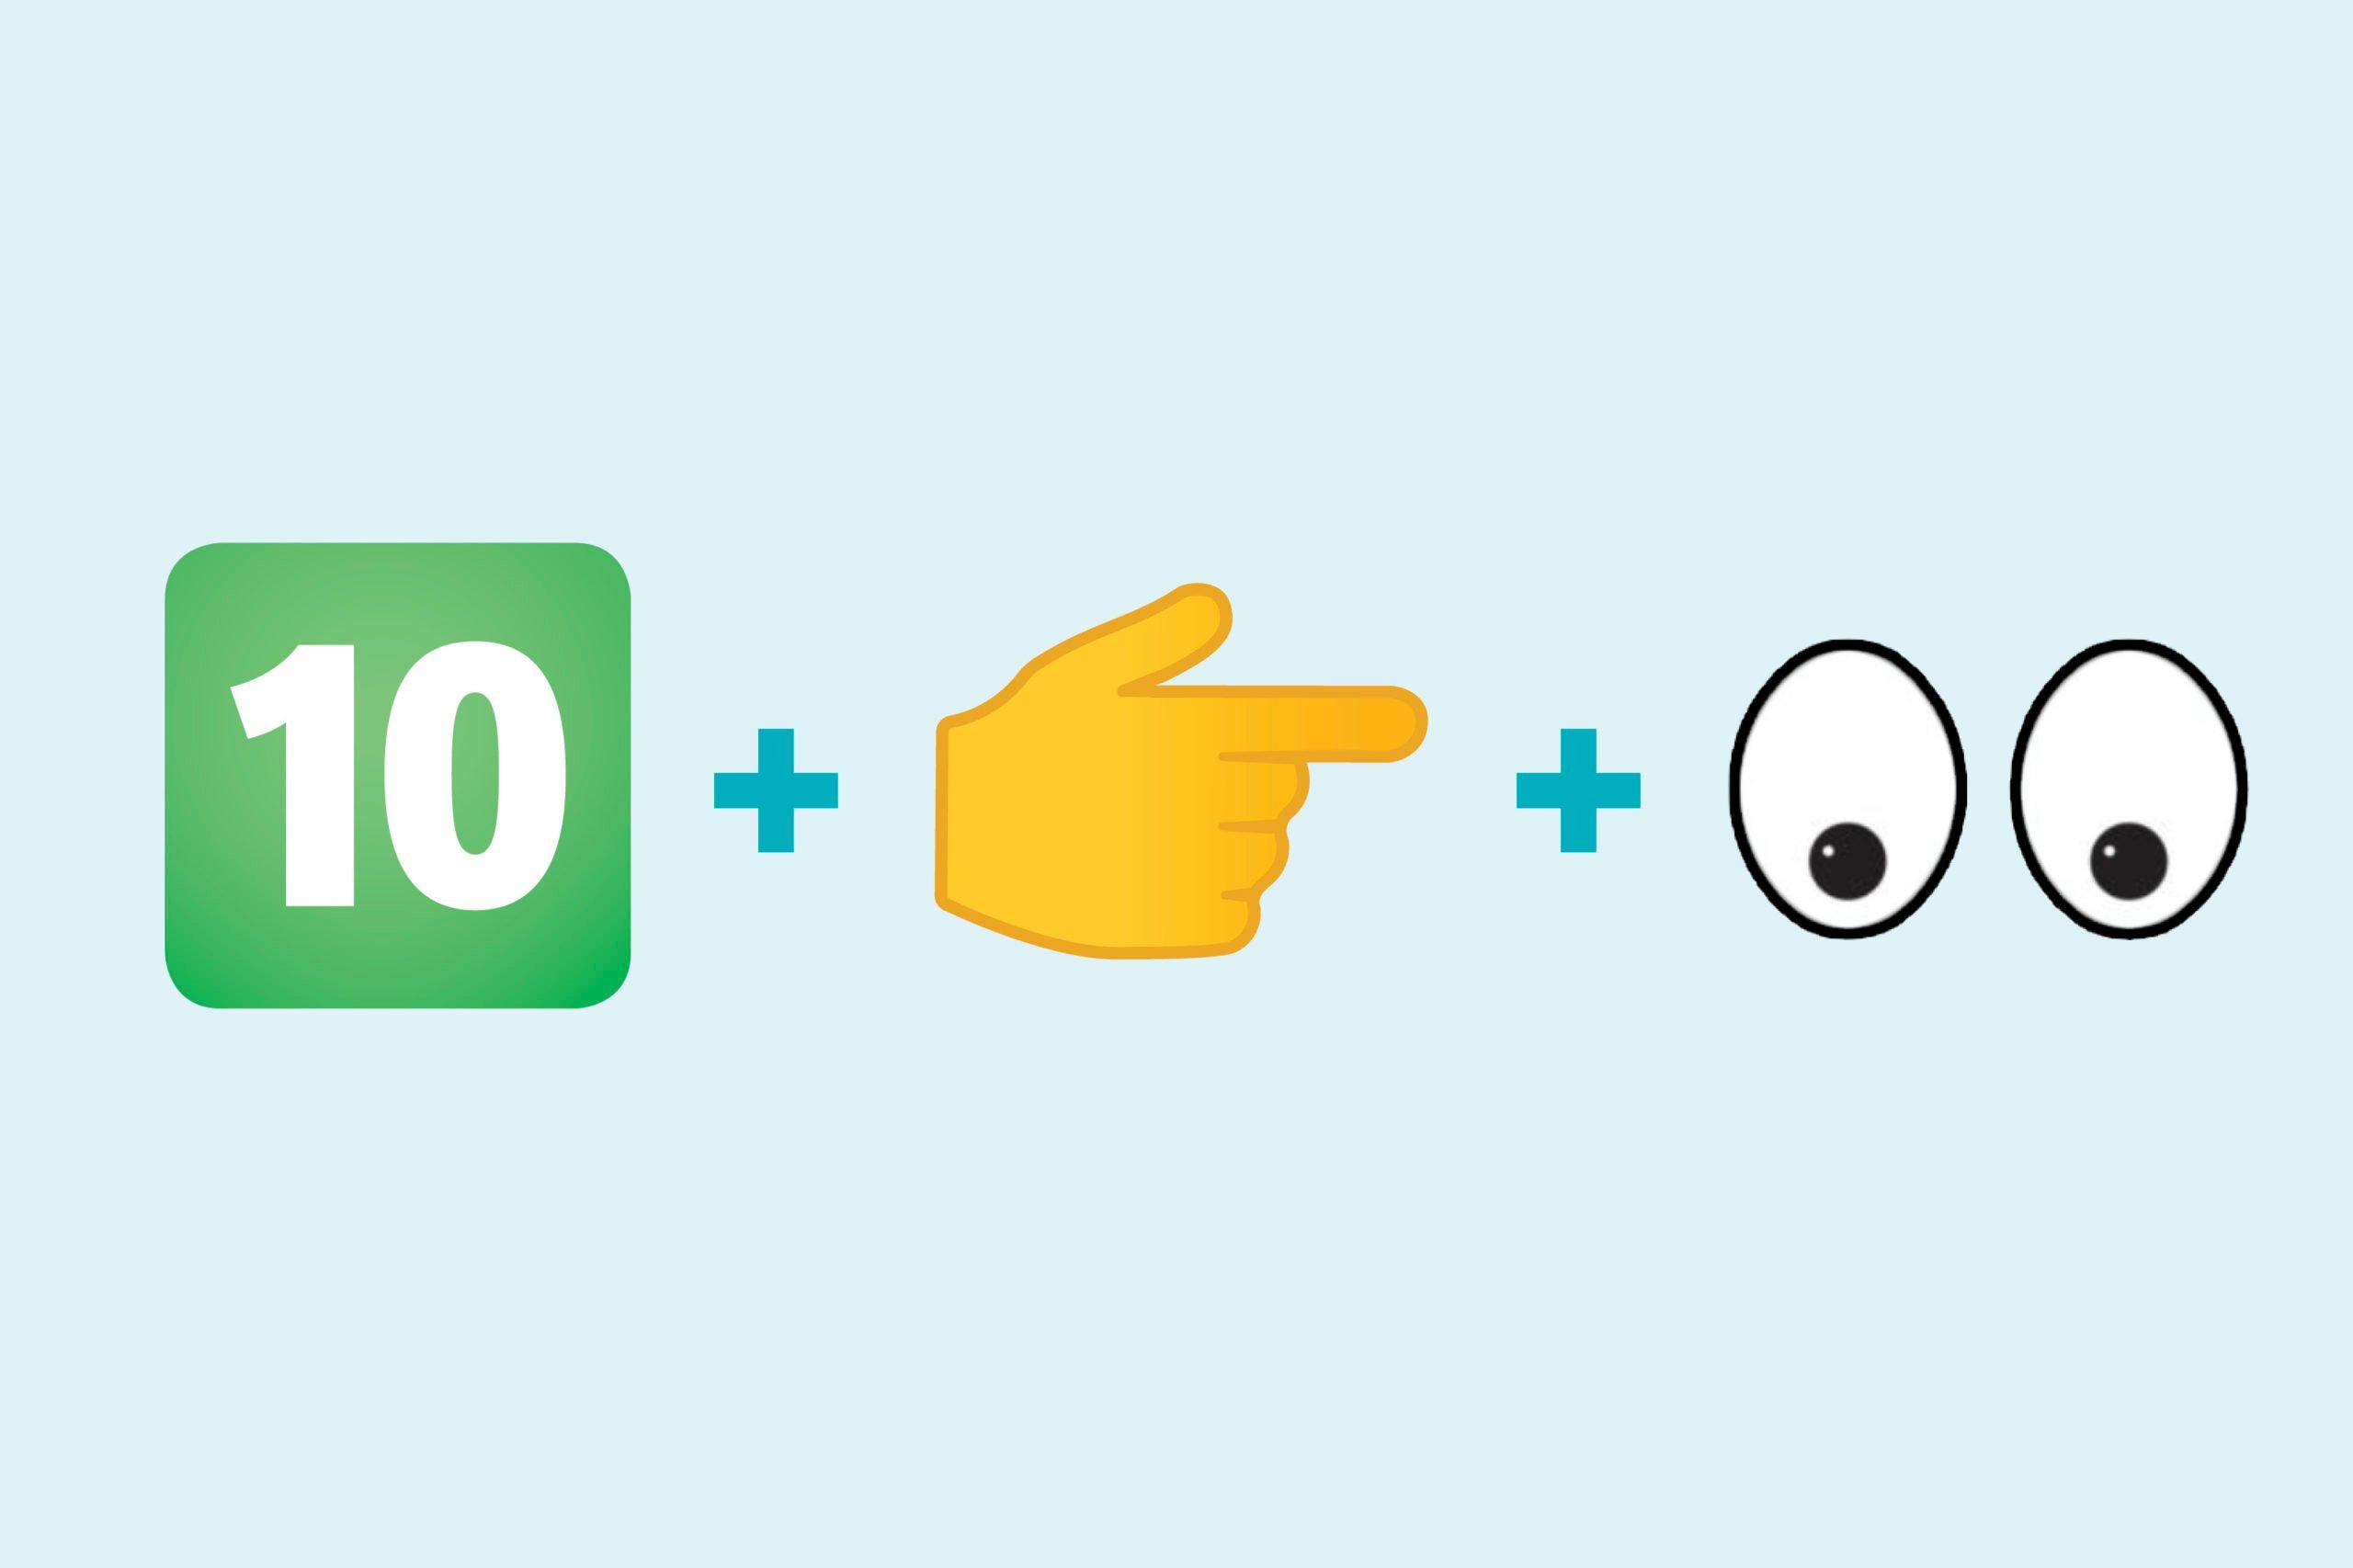 Number 10 emoji + point right emoji + eyes emoji